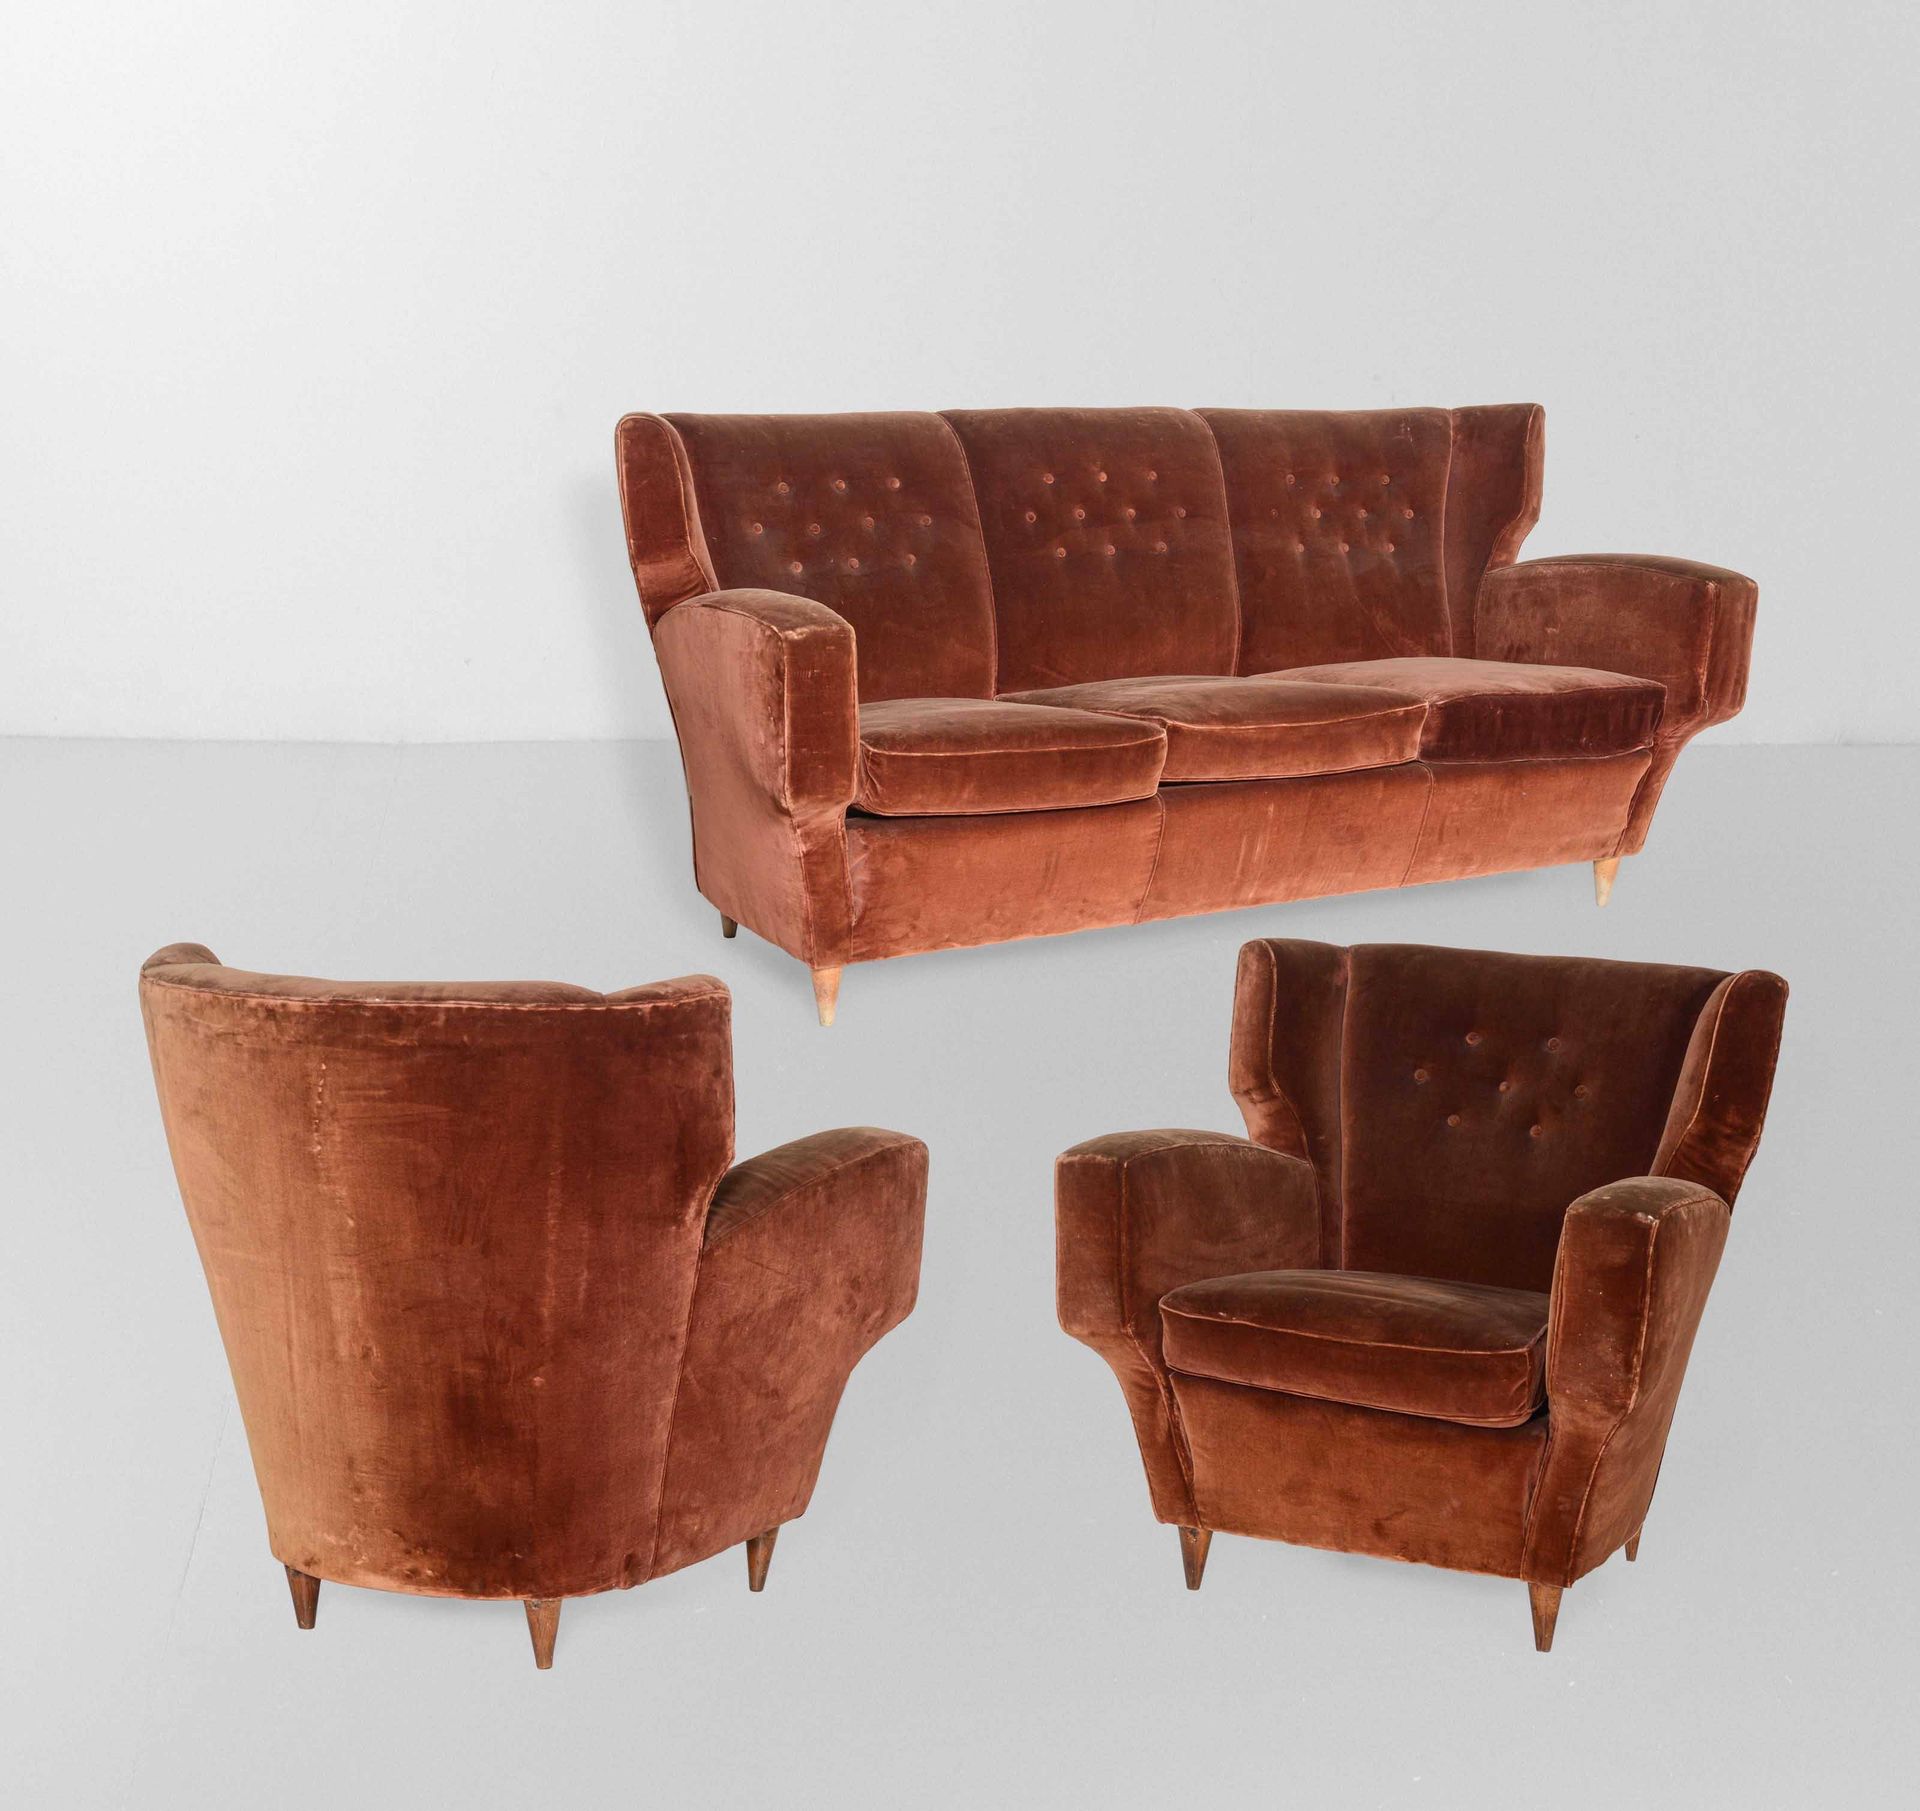 Melchiorre Bega 沙发和一对扶手椅，木质框架和支架，天鹅绒装饰。意大利制造，约1950年，沙发：cm 184x84 x h 85；扶手椅：cm 8&hellip;